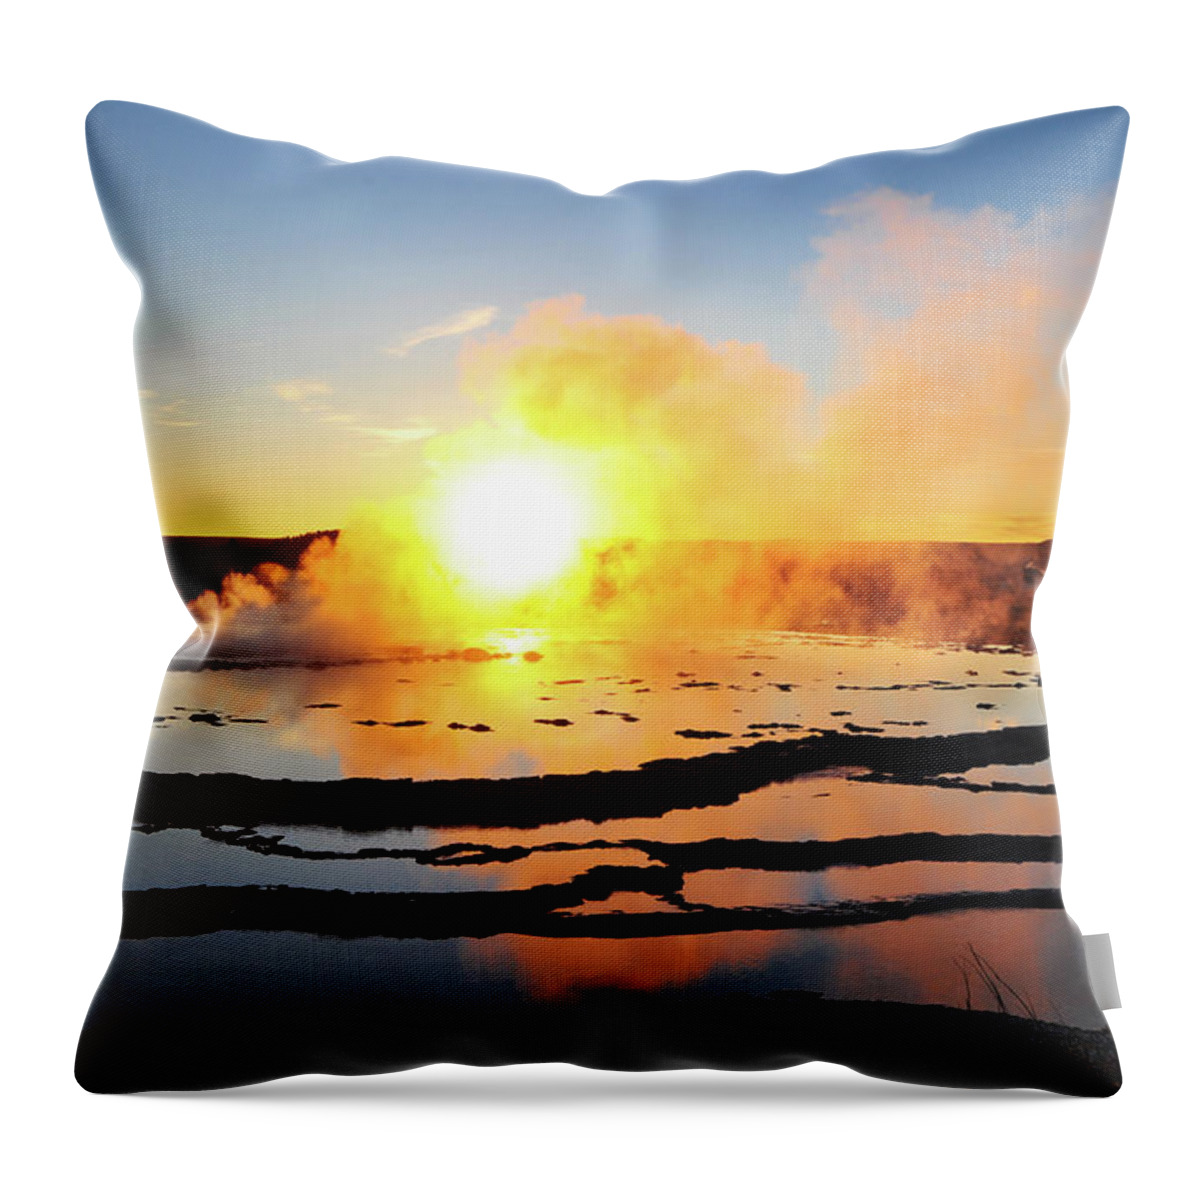 Geyser Throw Pillow featuring the photograph Geyser Smoke At Sunset by Piriya Photography